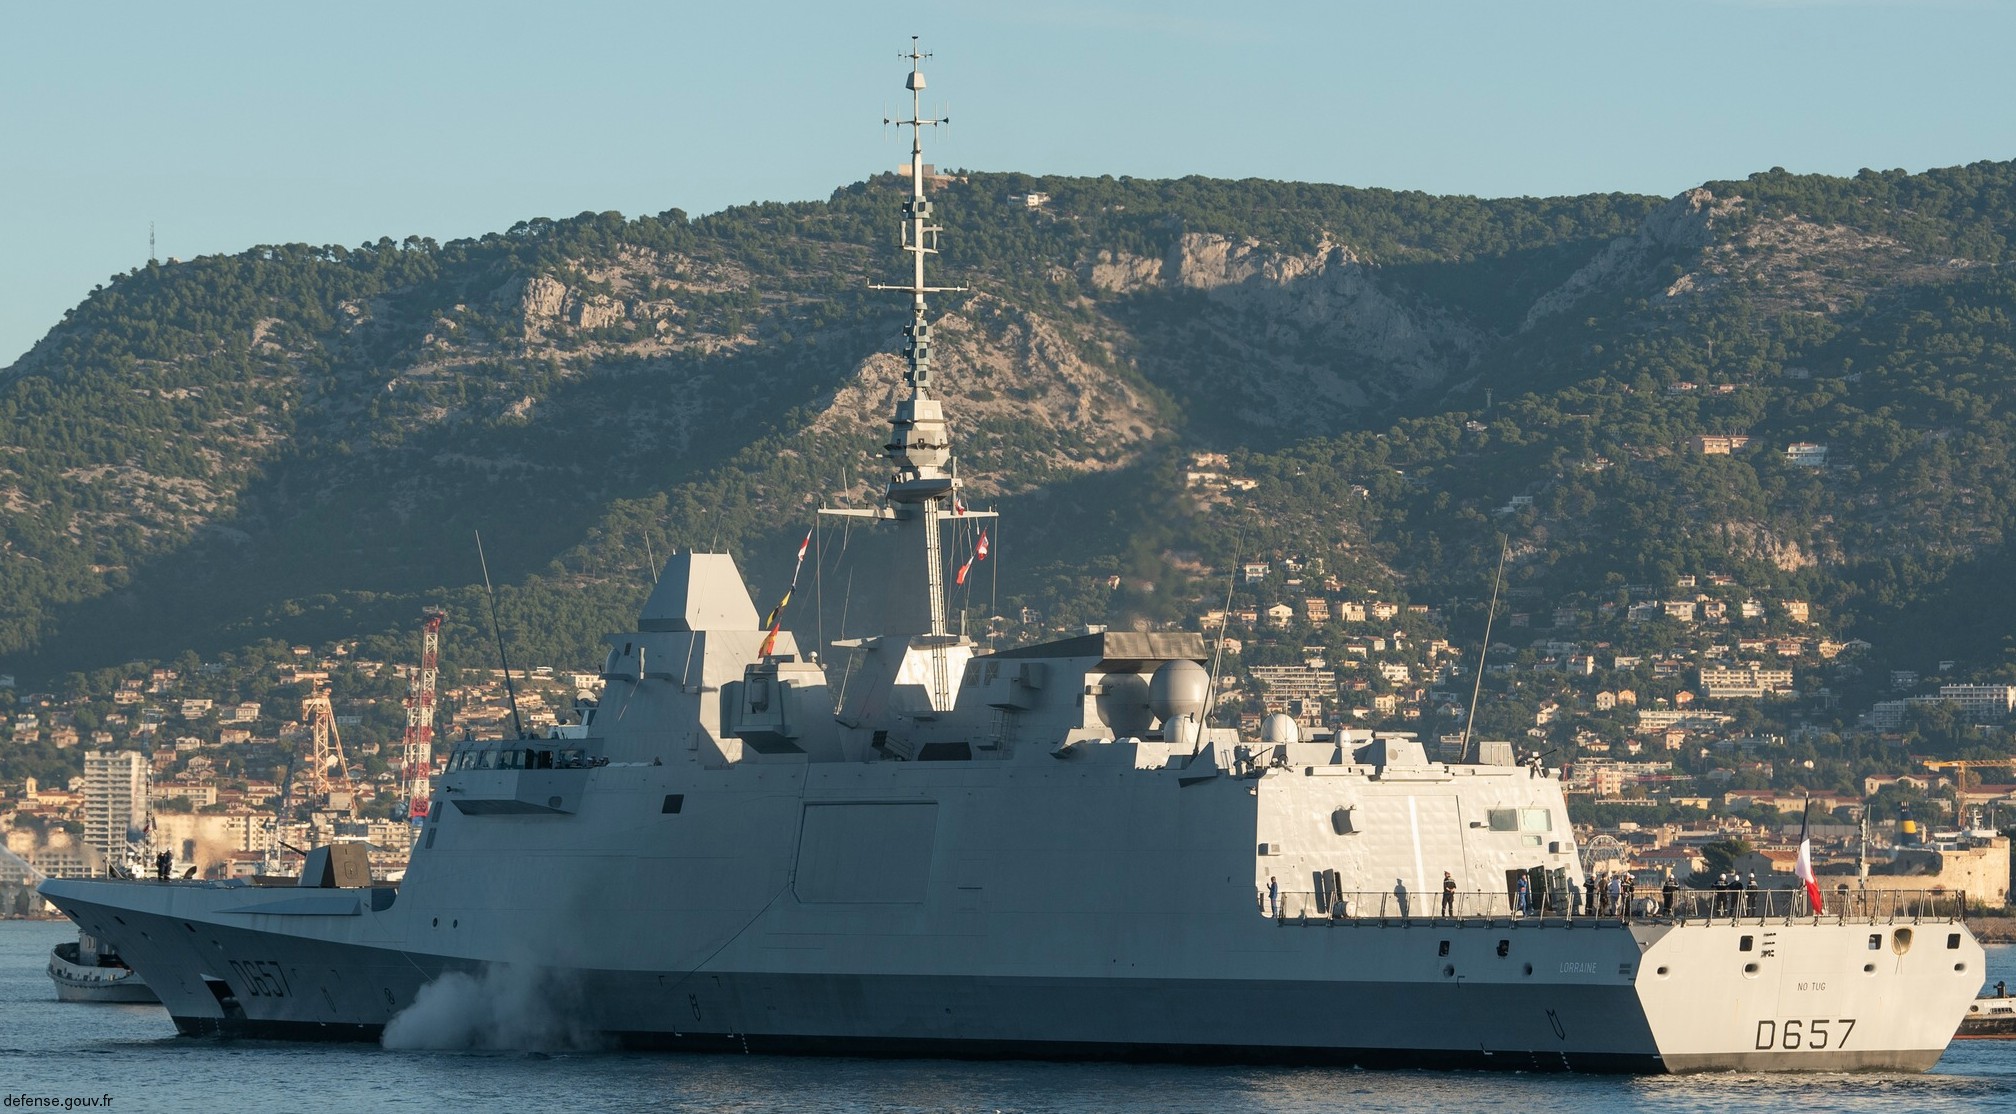 d-657 fs lorraine fremm aquitaine class frigate fregate multi purpose french navy marine nationale 09x naval group lorient